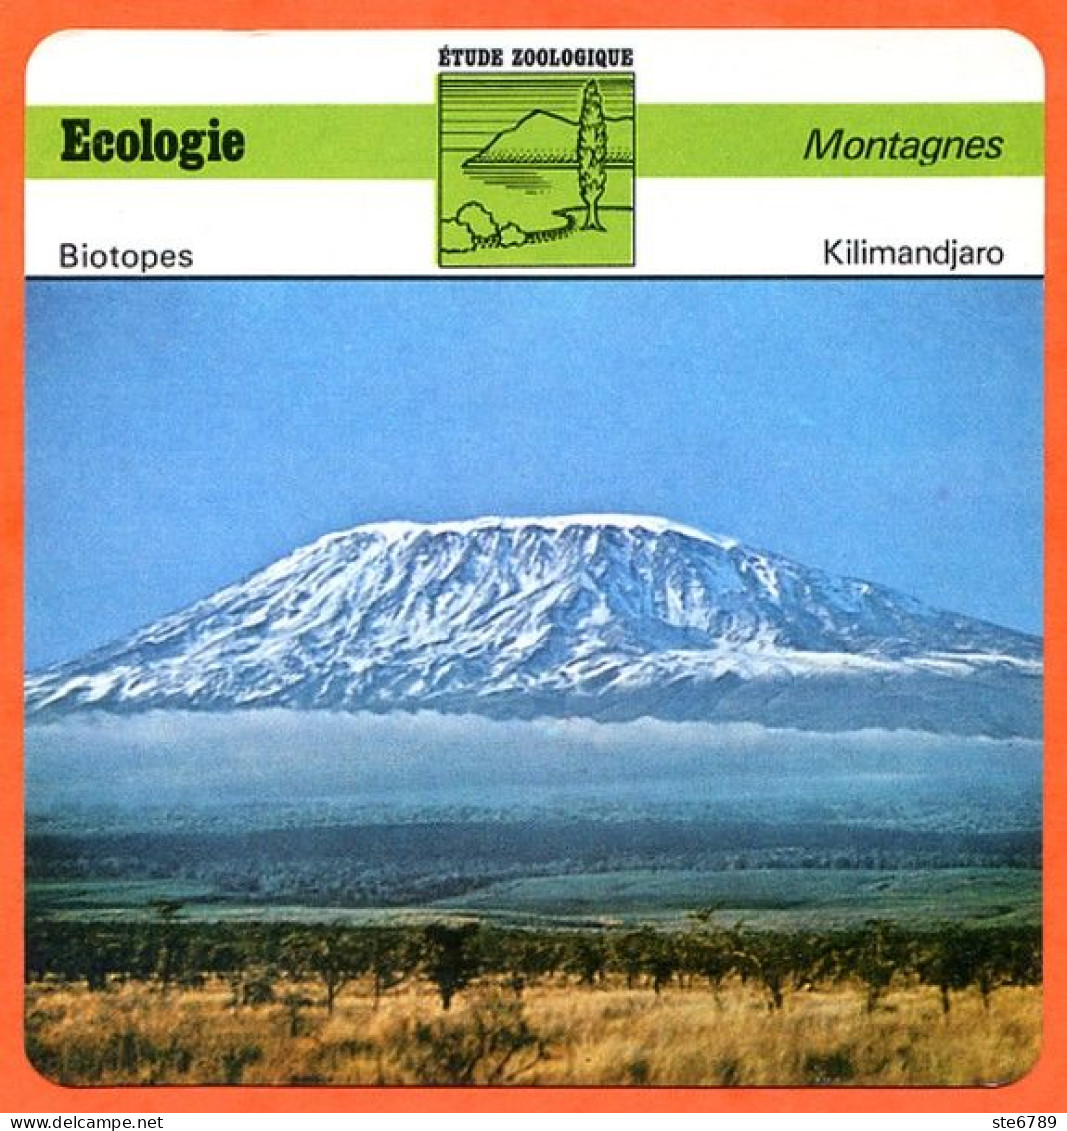 Fiche Ecologie Kilimandjaro  Montagnes Etude Zoologique Biotopes - Aardrijkskunde